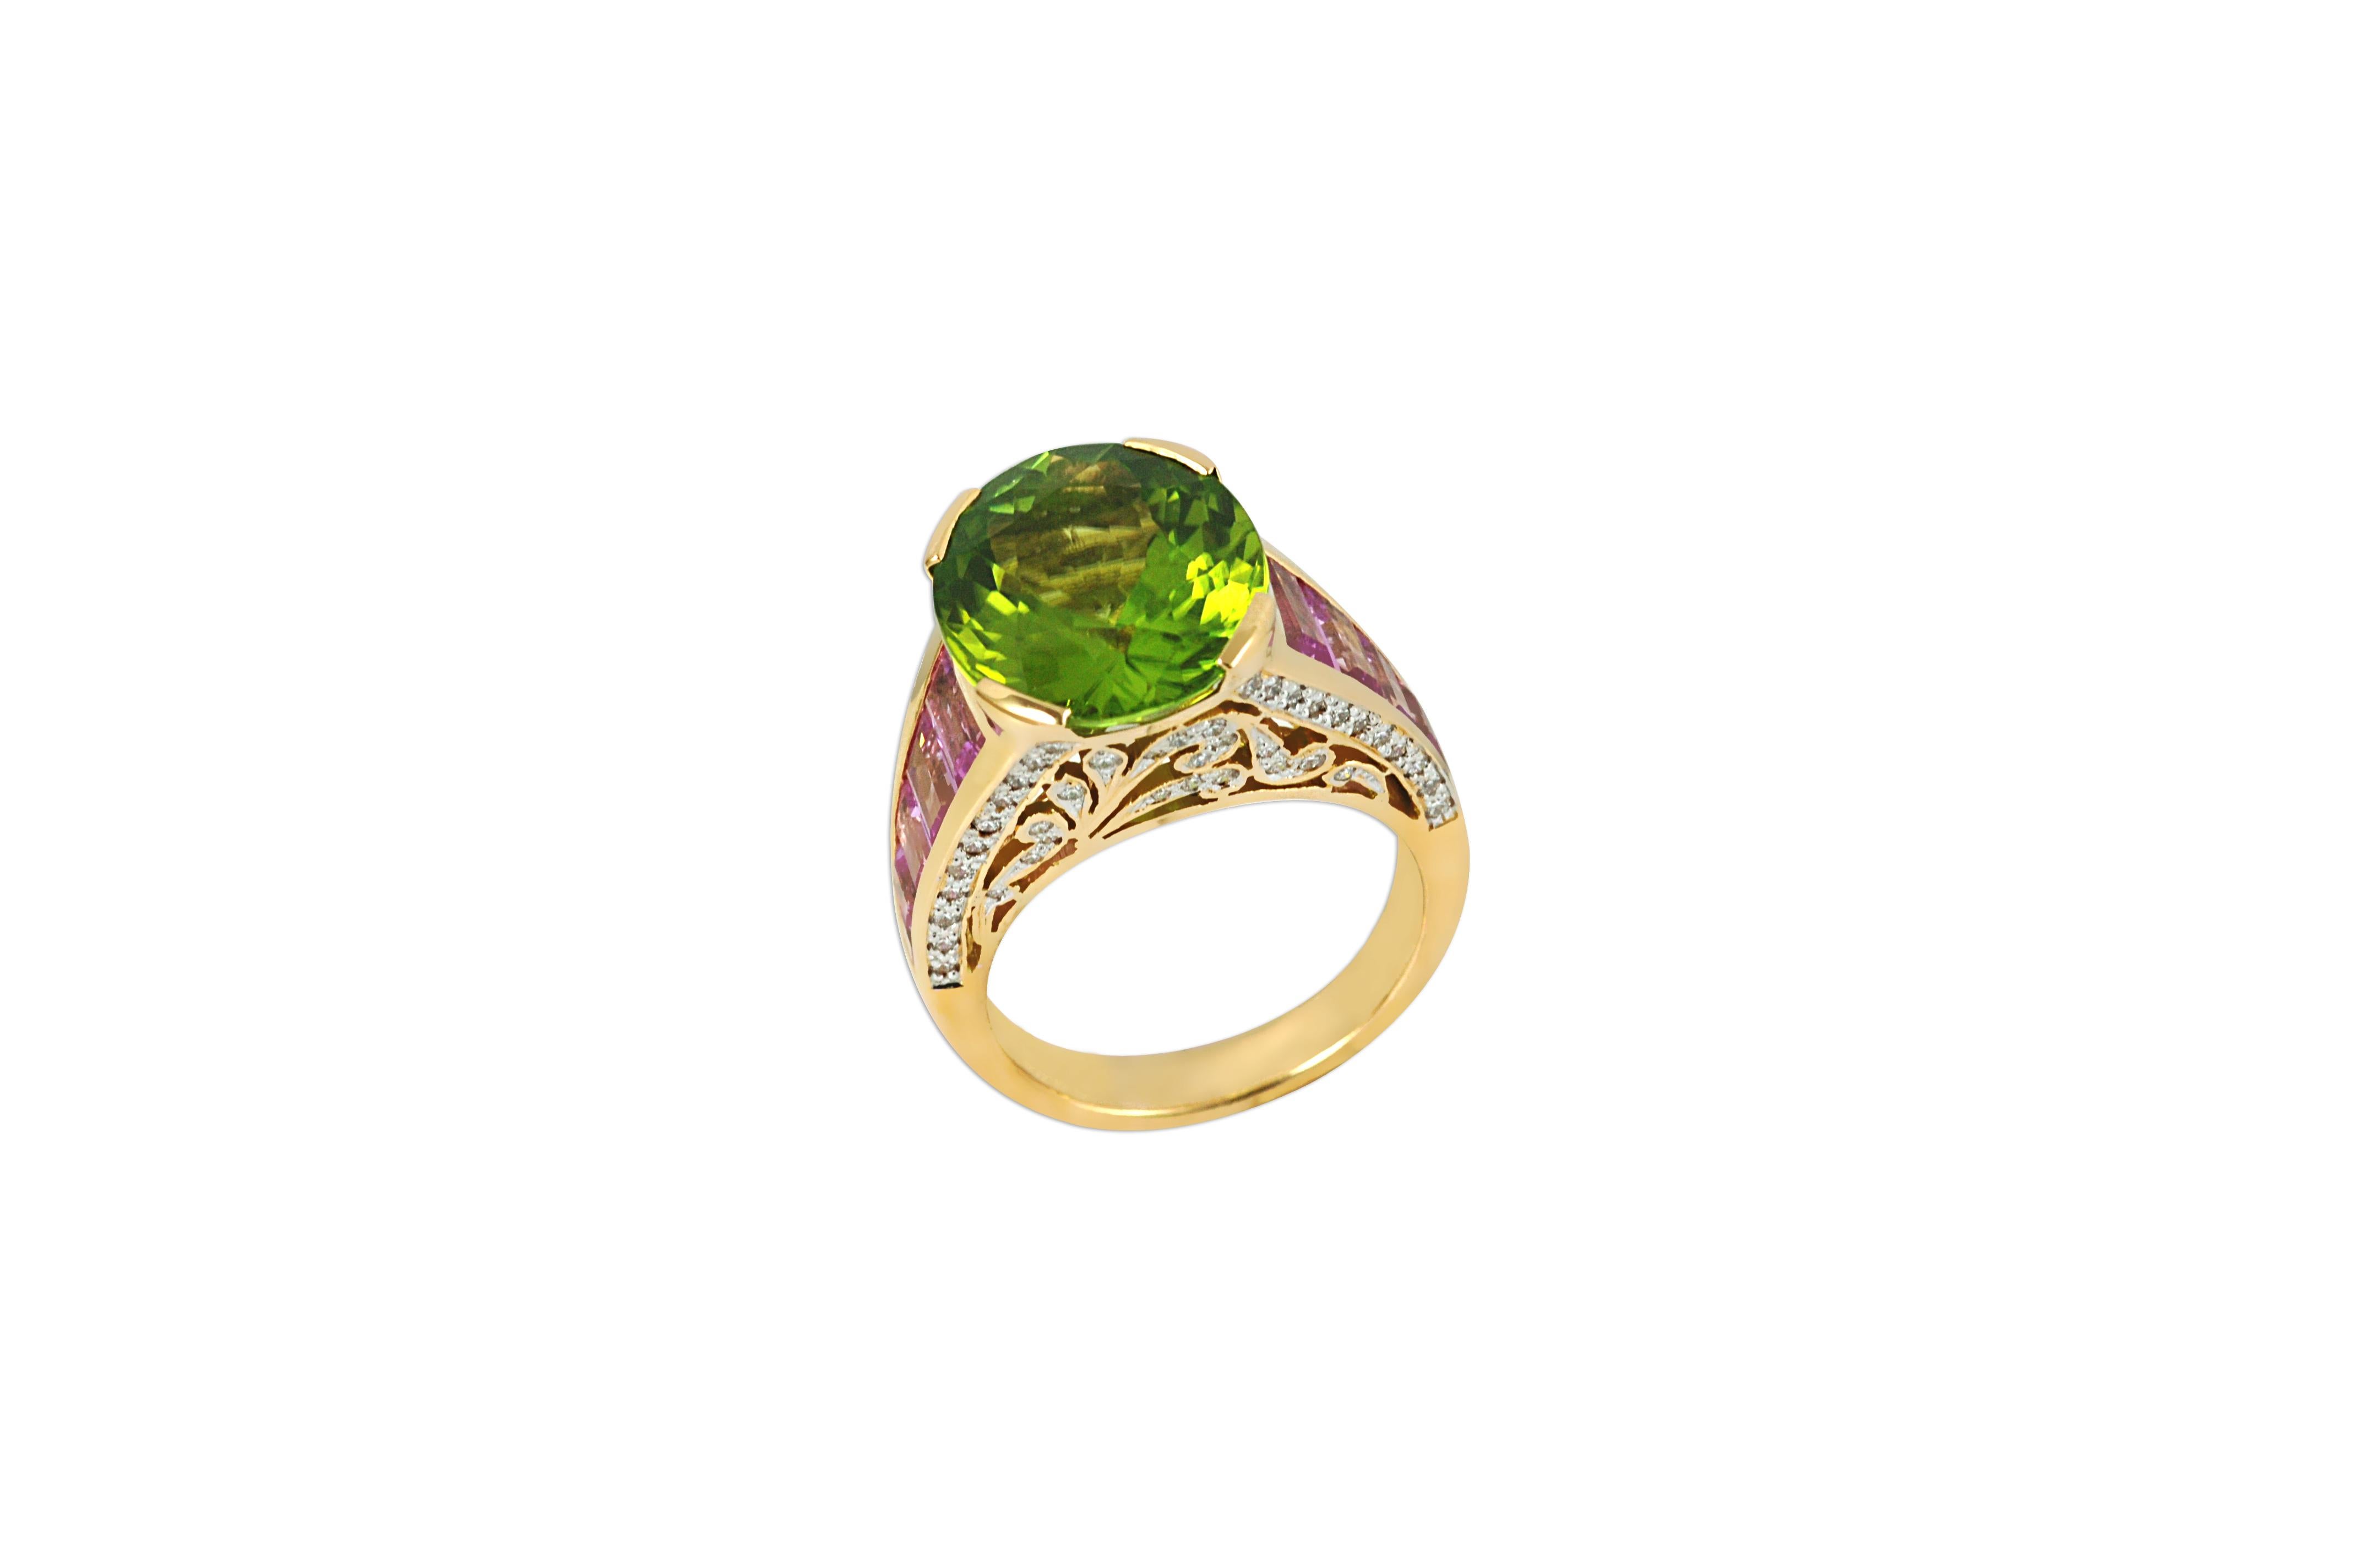 Peridot 7.77 carats, Pink Sapphire 3.27 carats with Diamond 0.35 carat Ring set in 18 Karat Gold Settings

Width: 2 cm
Length: 1.4 cm 
Ring Size:  50
Weight: 8.99 grams

